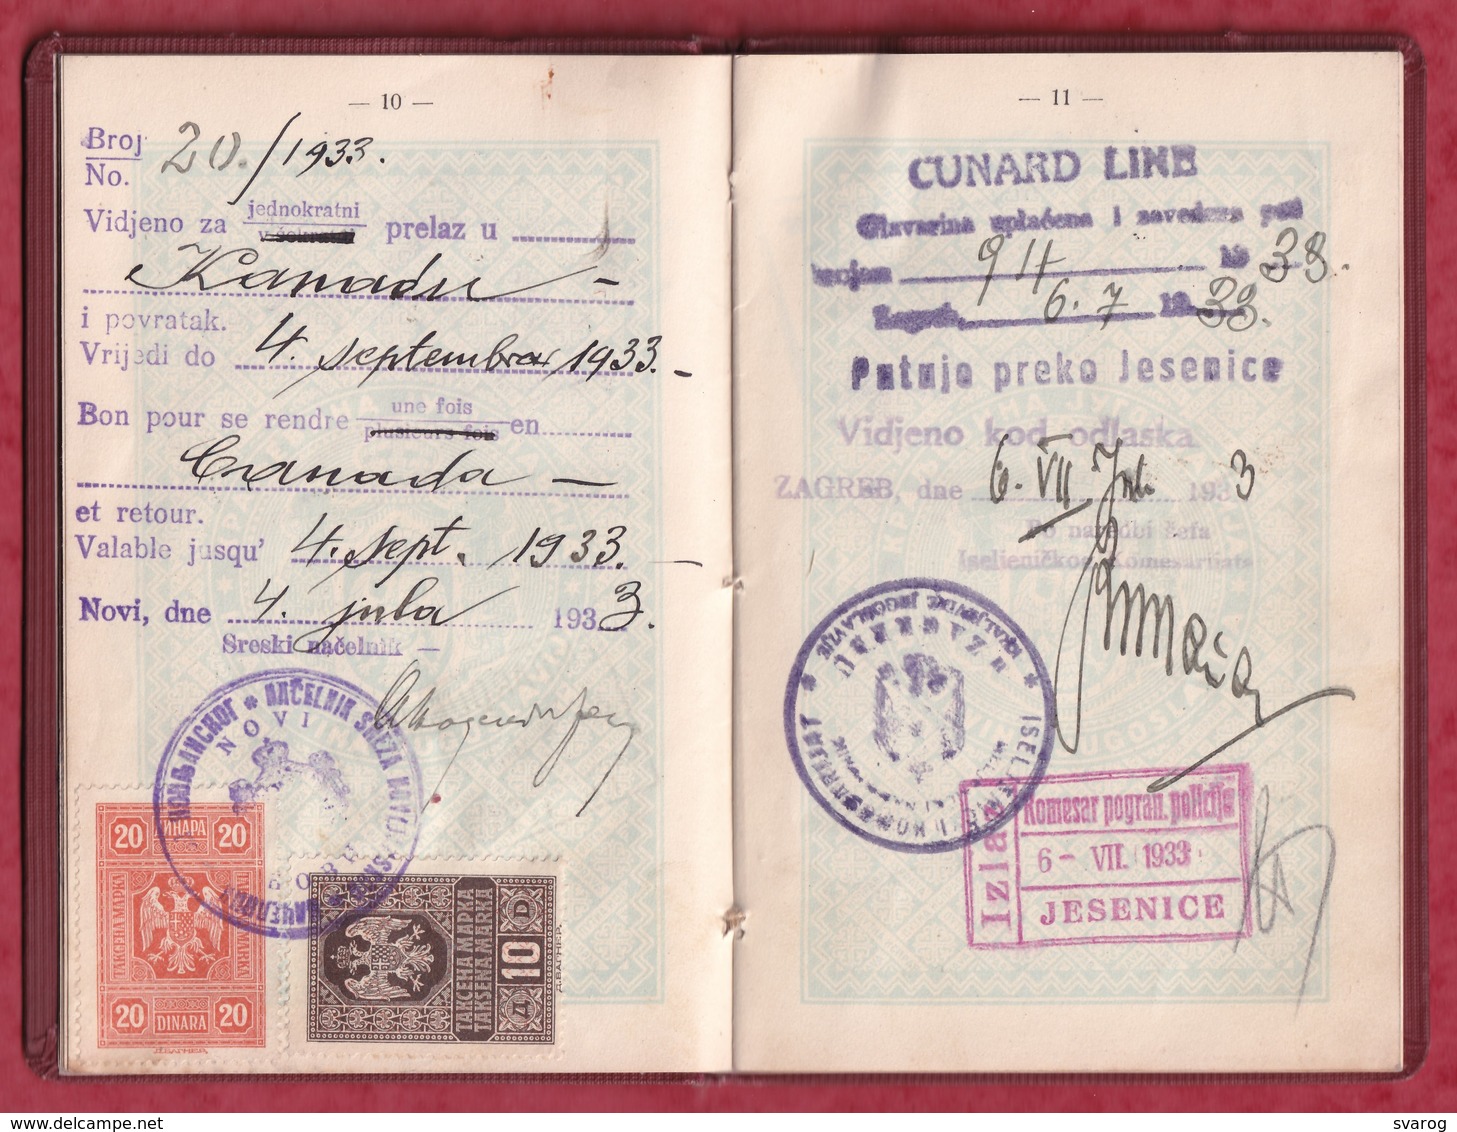 ROYAUME YUGOSLAVIA - PASSEPORT - PASSPORT - Austria, Yugoslavia revenue stamps visas - Issued in Montreal, Canada 1932.